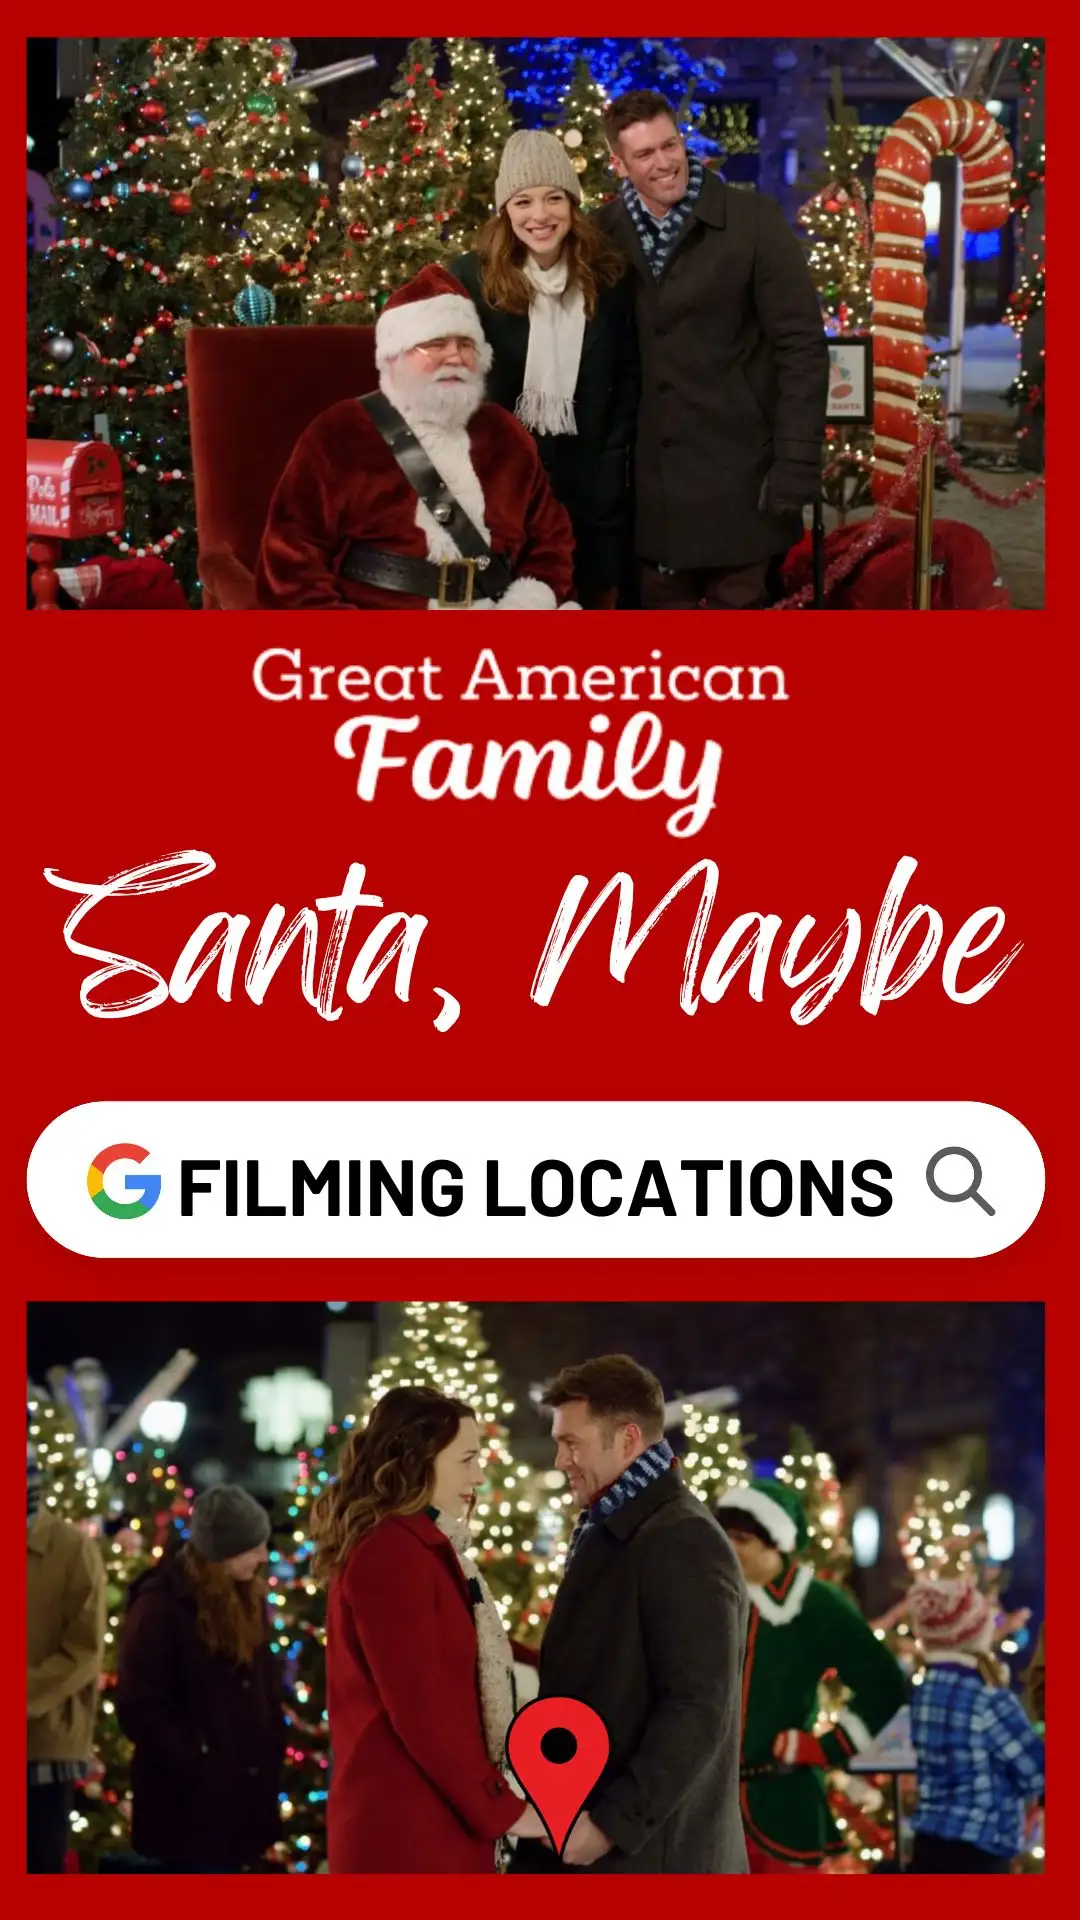 Santa Maybe Filming Locations